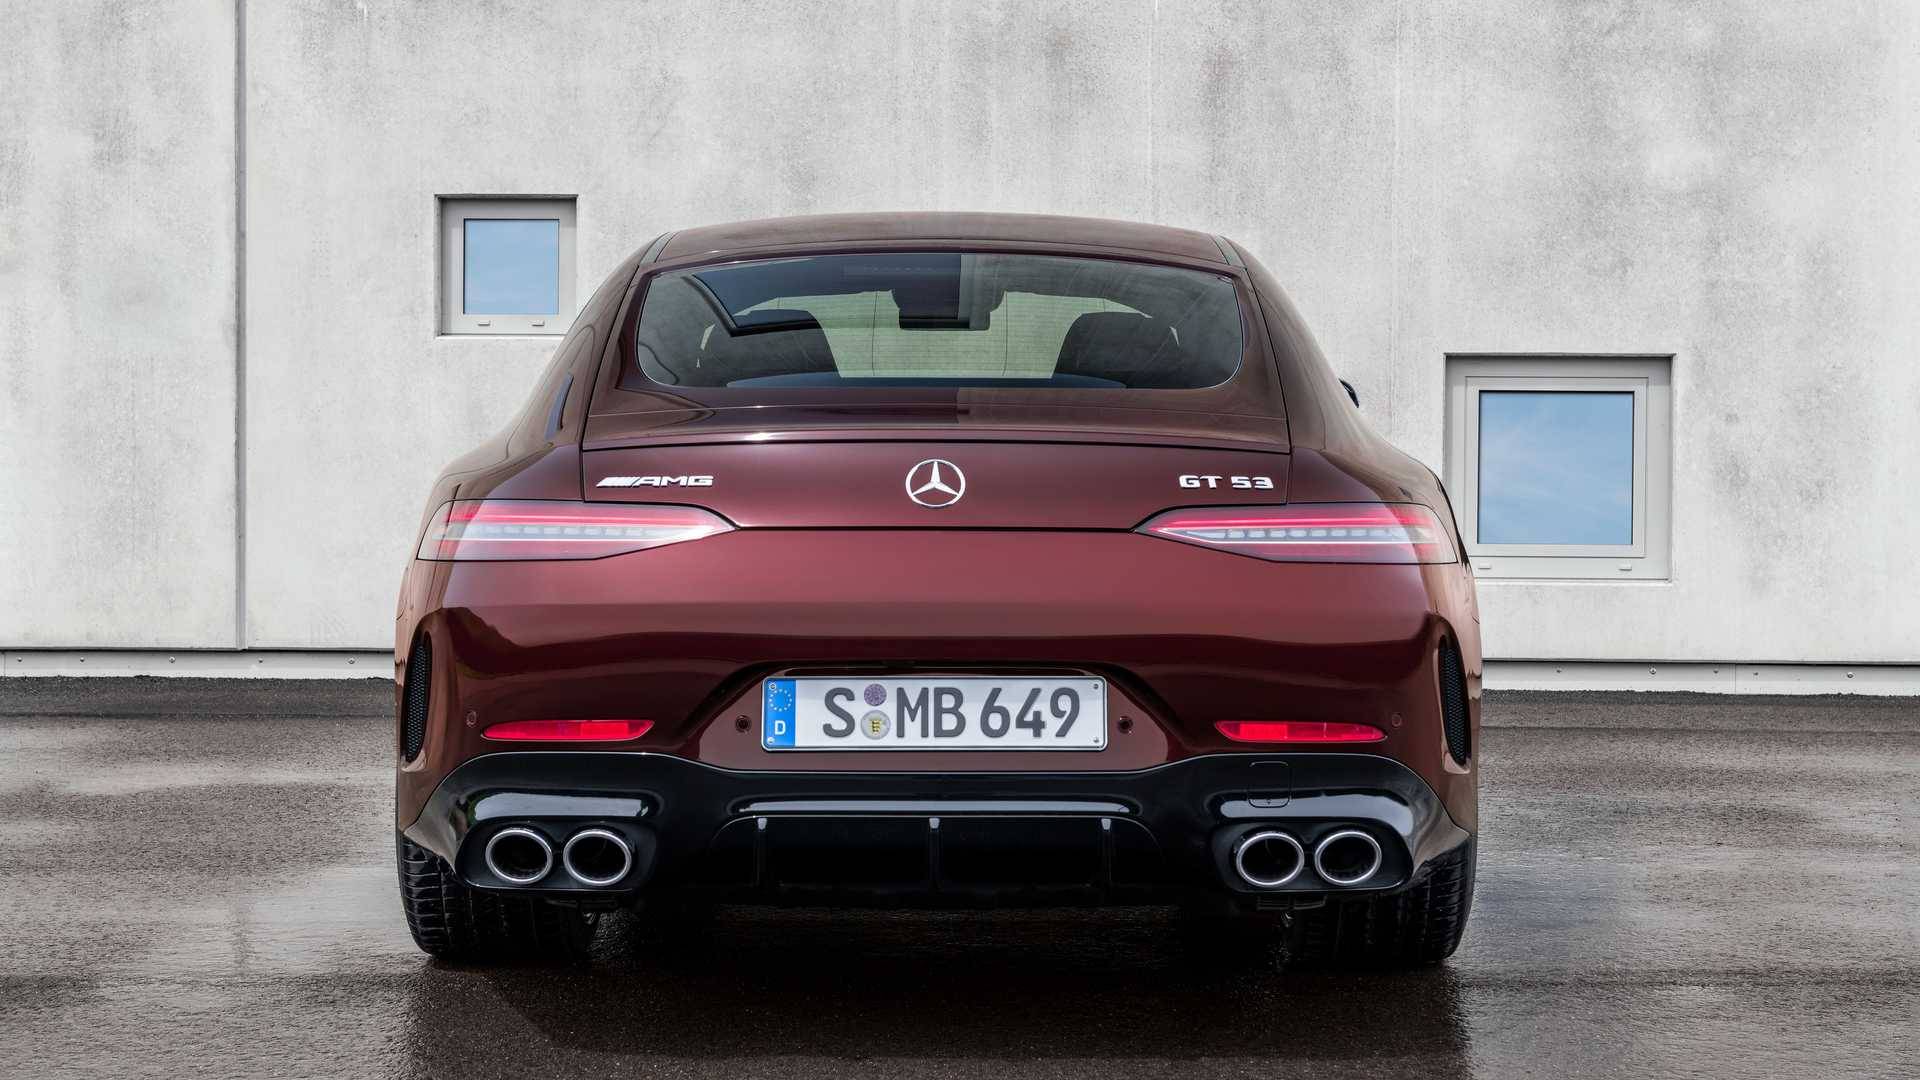 2022-es Mercedes-AMG GT 4-Door Coupe hátulról